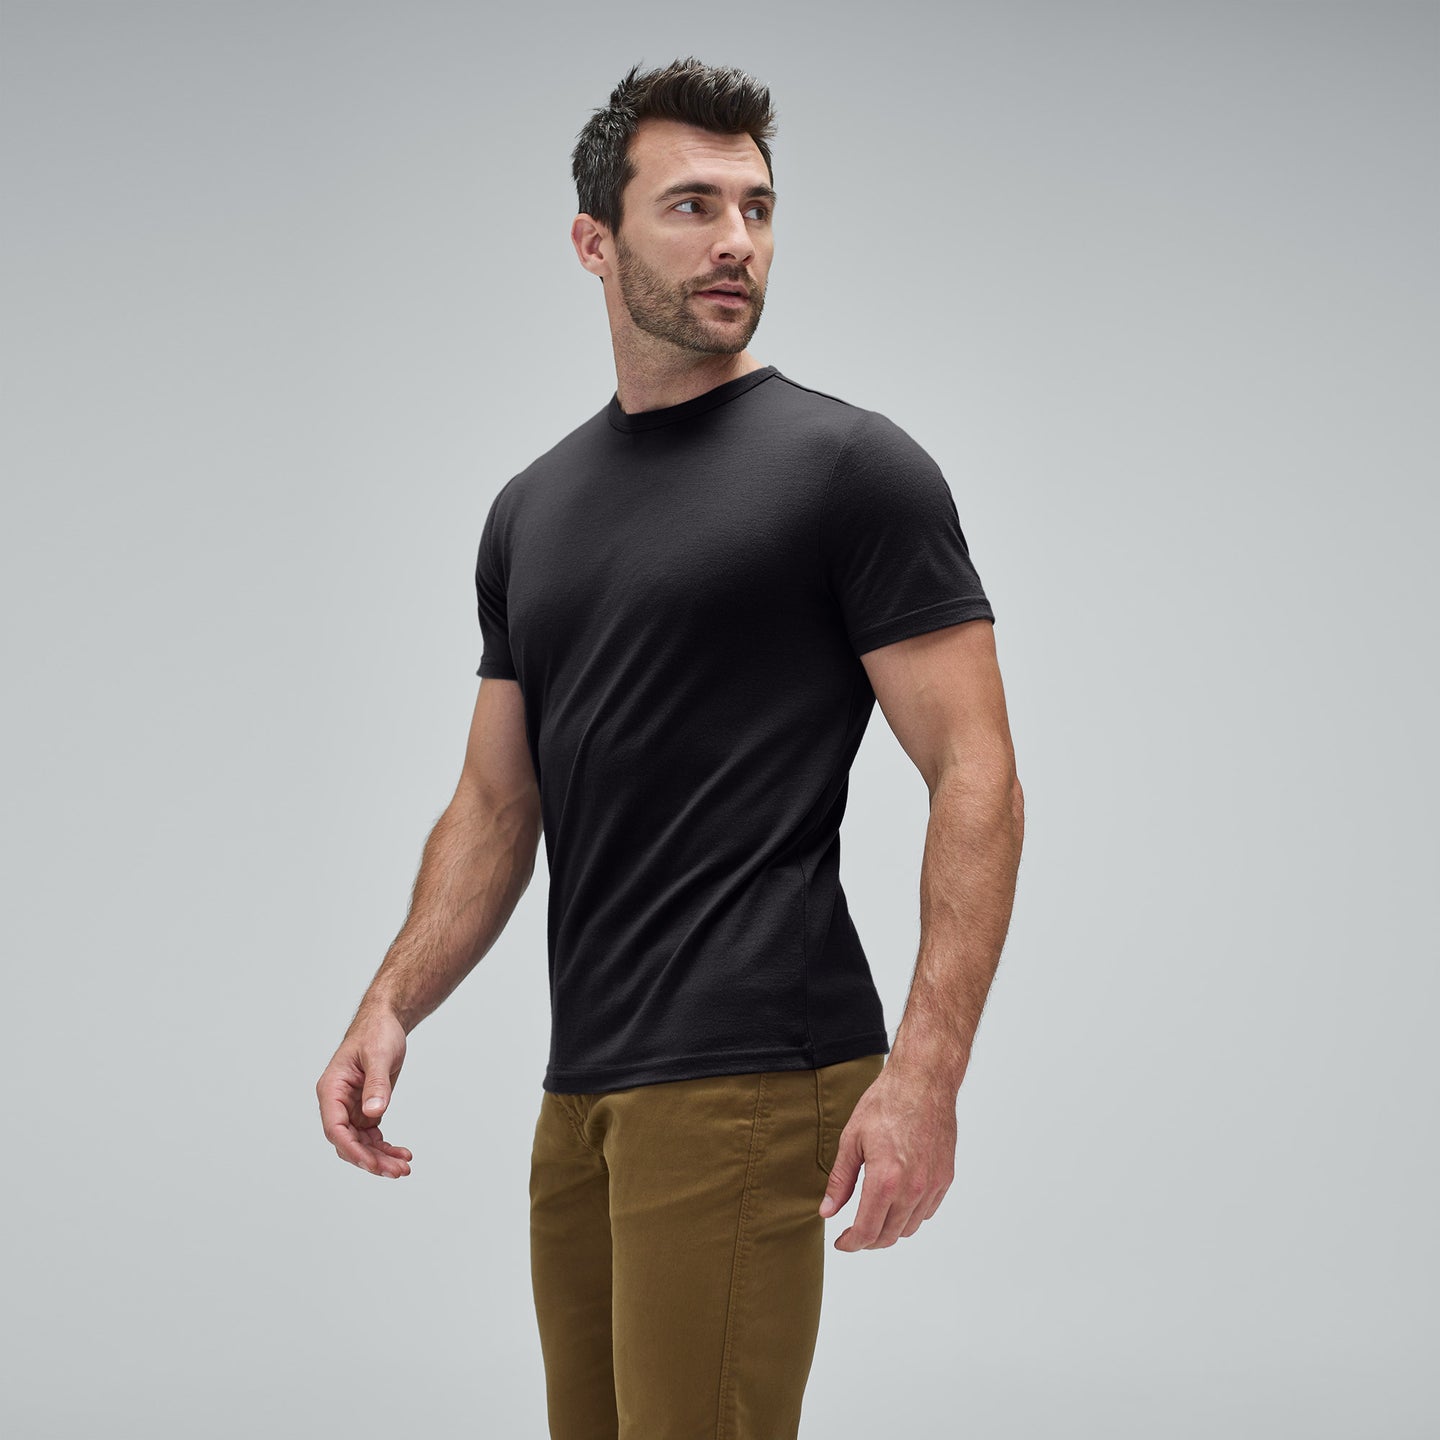 Icebreaker Merino Wool Long Sleeve Thermal Shirt for Men, 175 Everyday -  Odor-Resistant Crewneck Hiking Shirt with Slim Fit - Merino Wool Base  Layer, Men's - Outdoor Clothing - X-Large, Black 